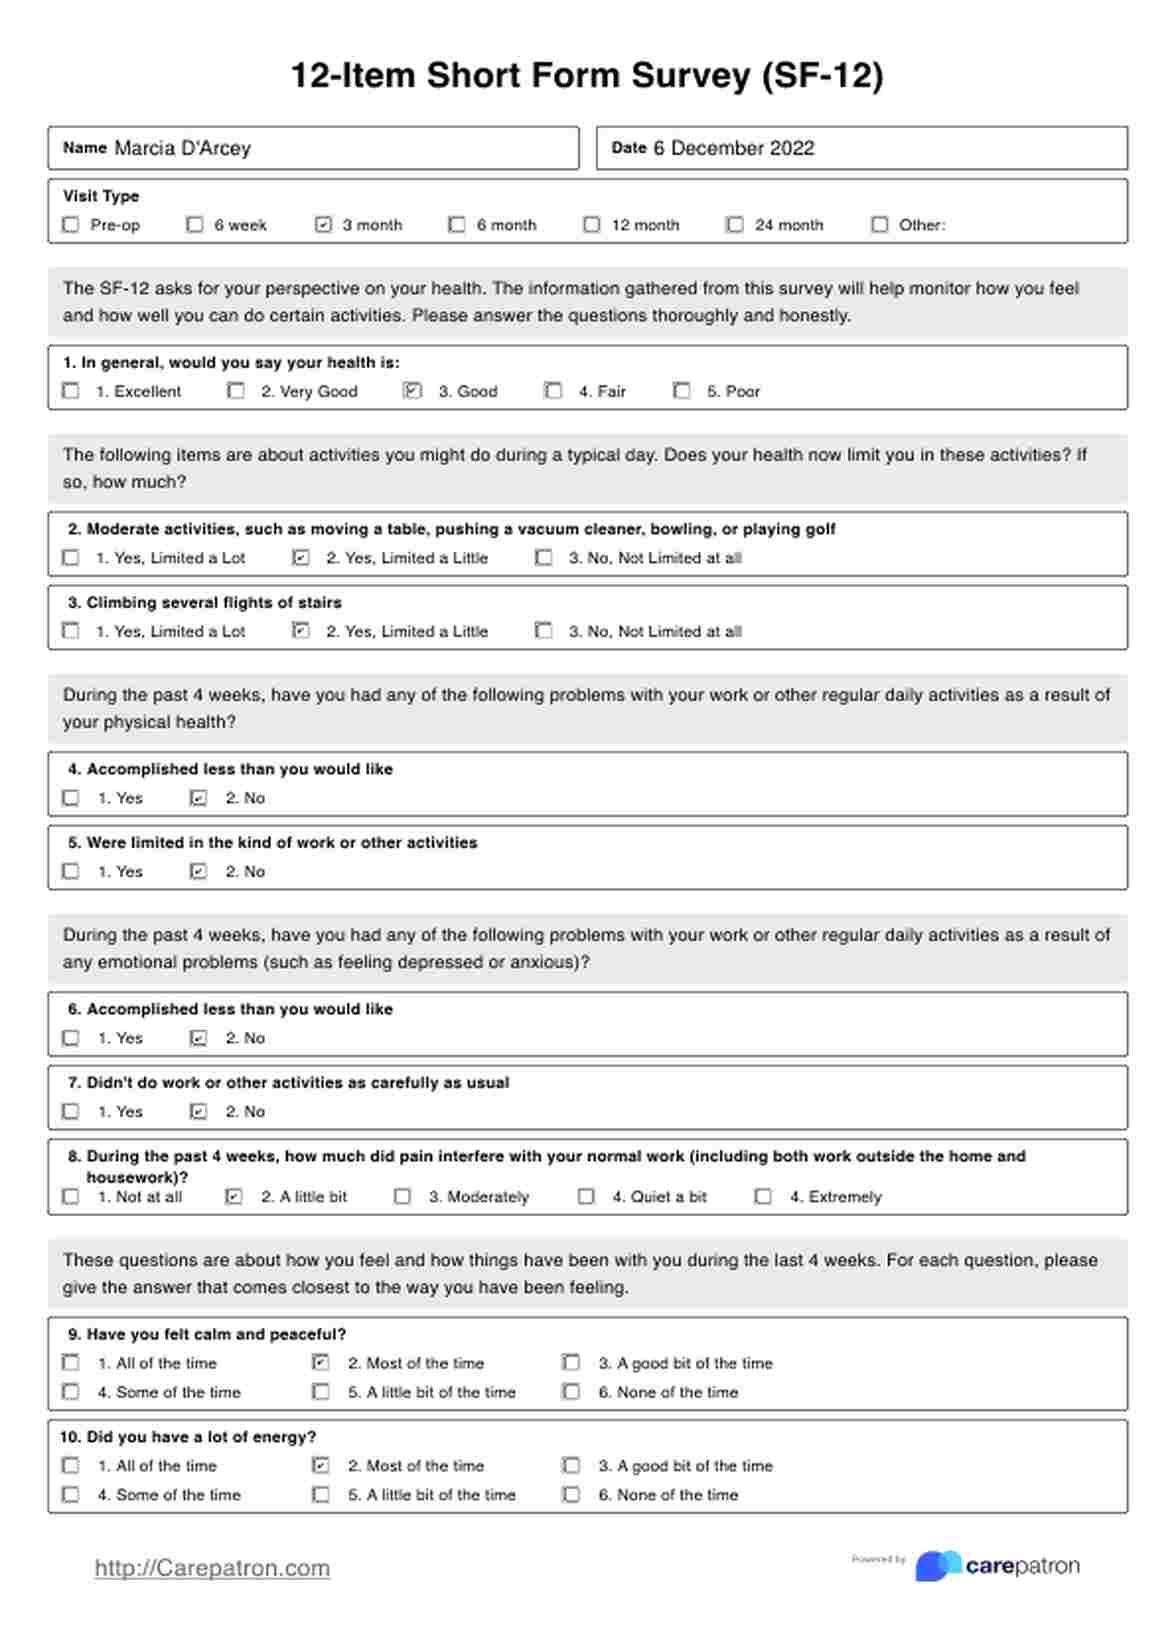 12-Item Short Form Survey PDF Example